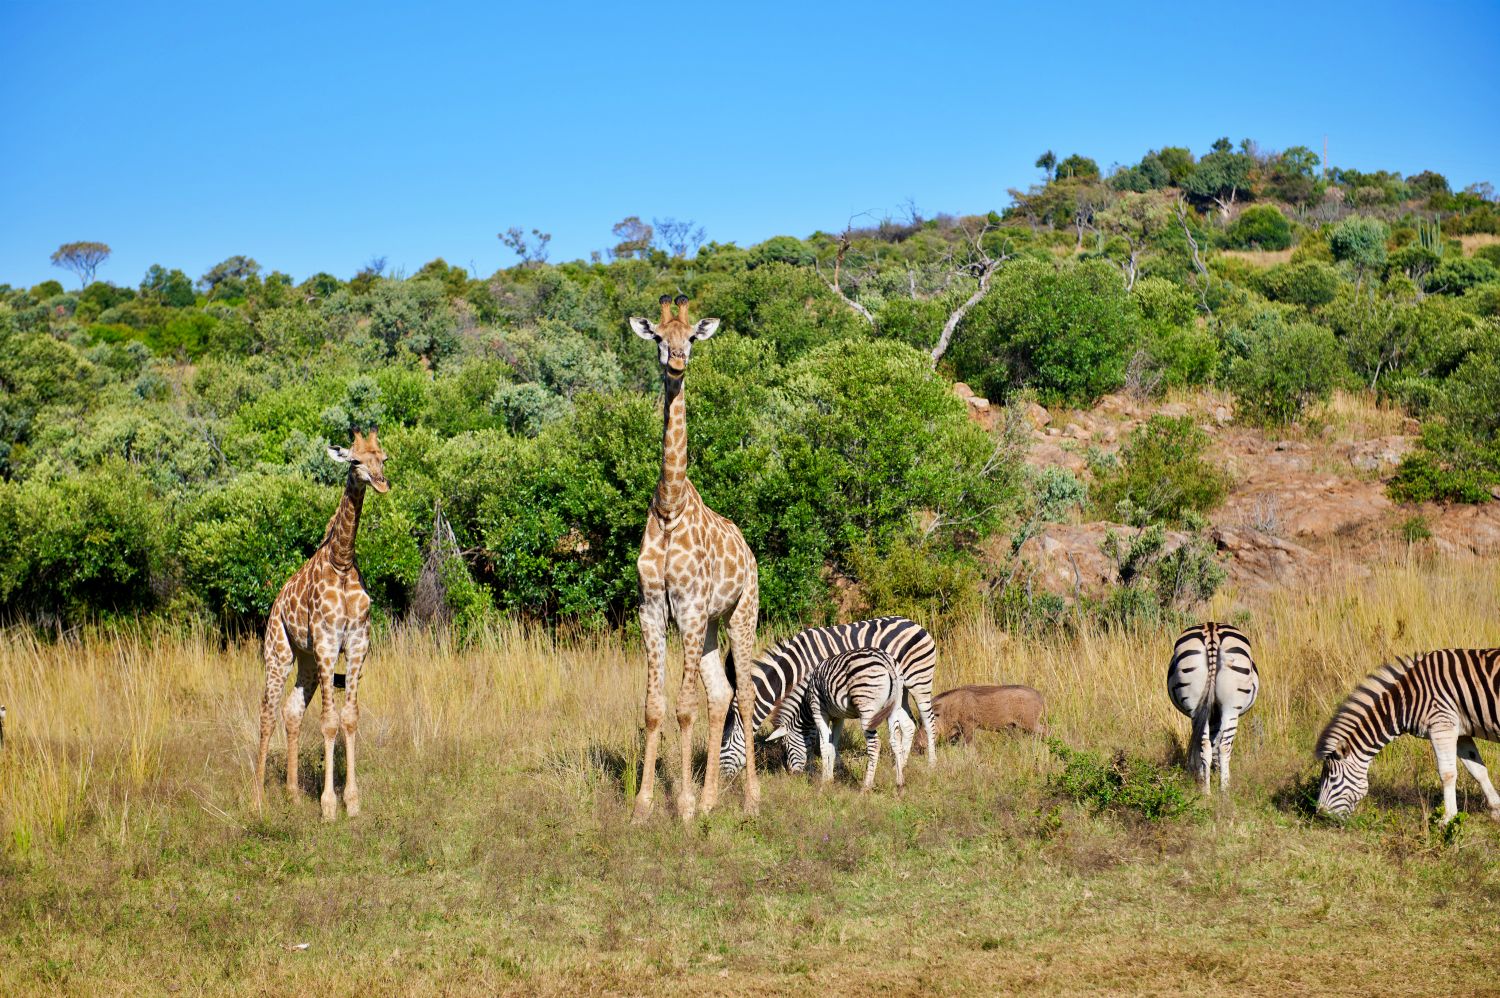 Giraffe and zebra in A Safari Romance